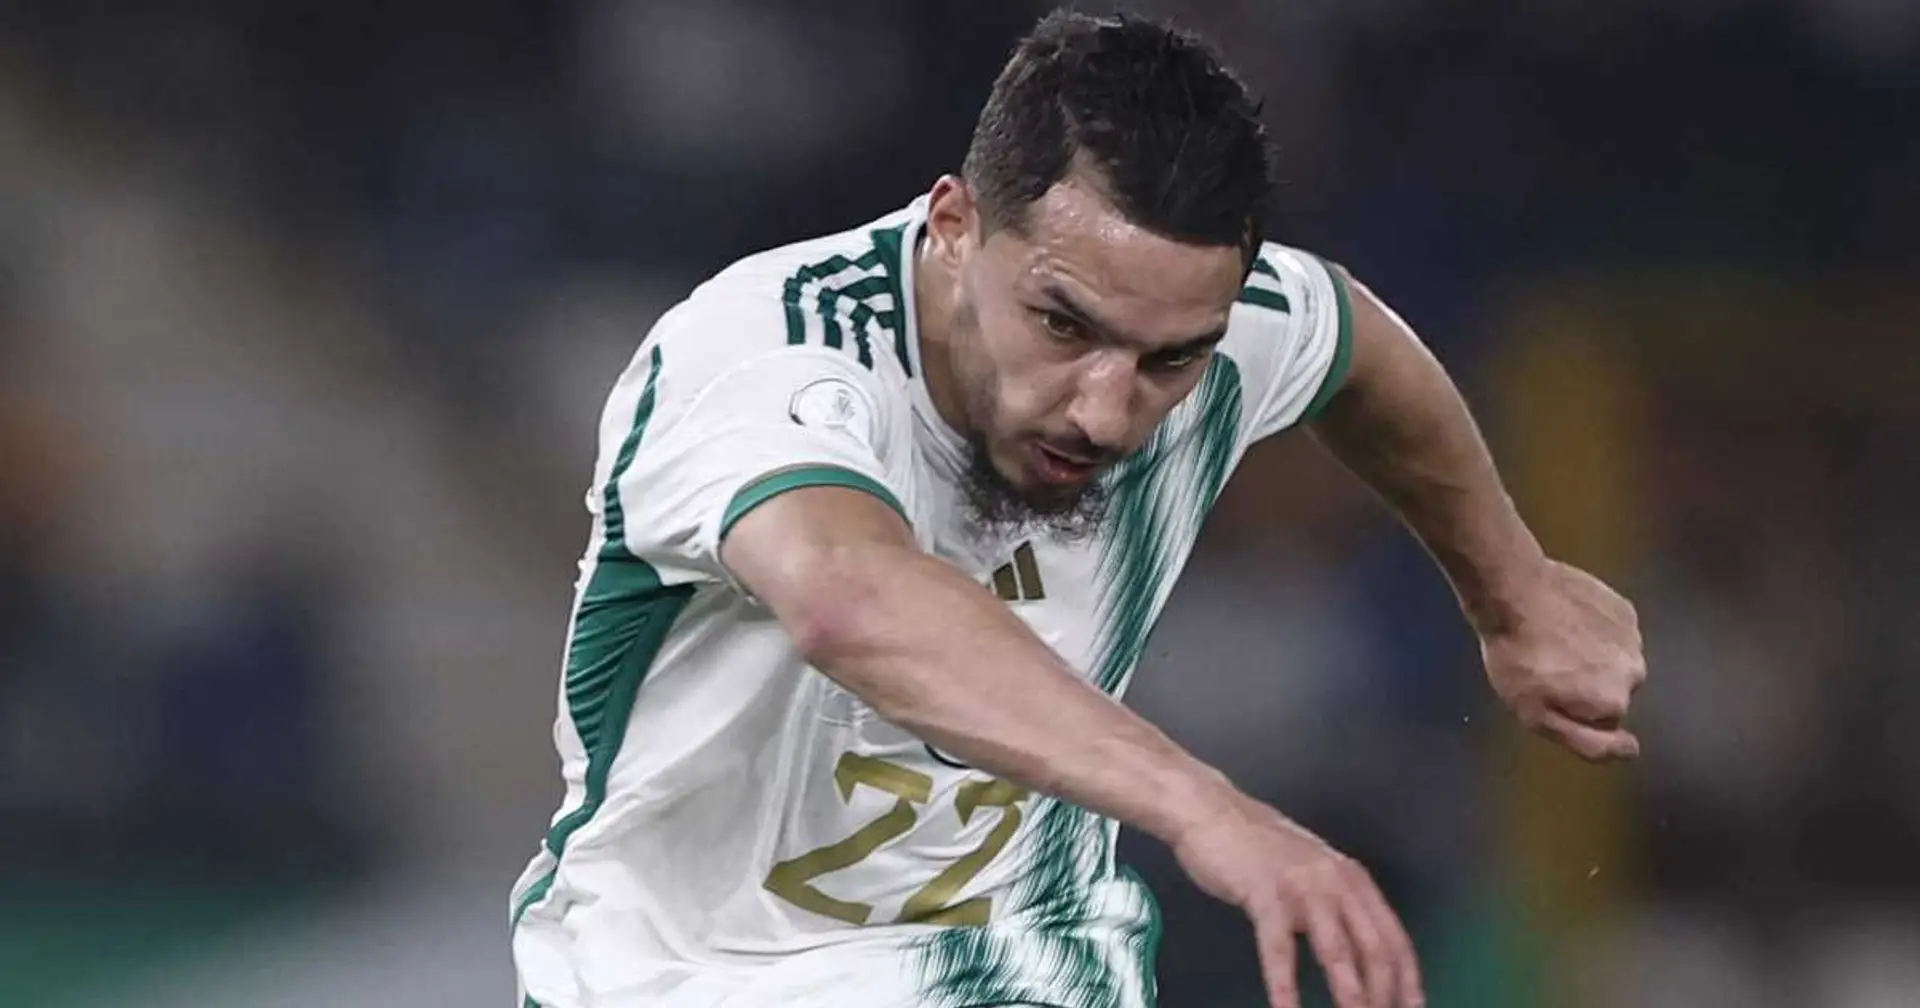 FLASH| La Mauritania batte l'Algeria in Coppa d'Africa, Ismael Bennacer ritorna al Milan anticipatamente